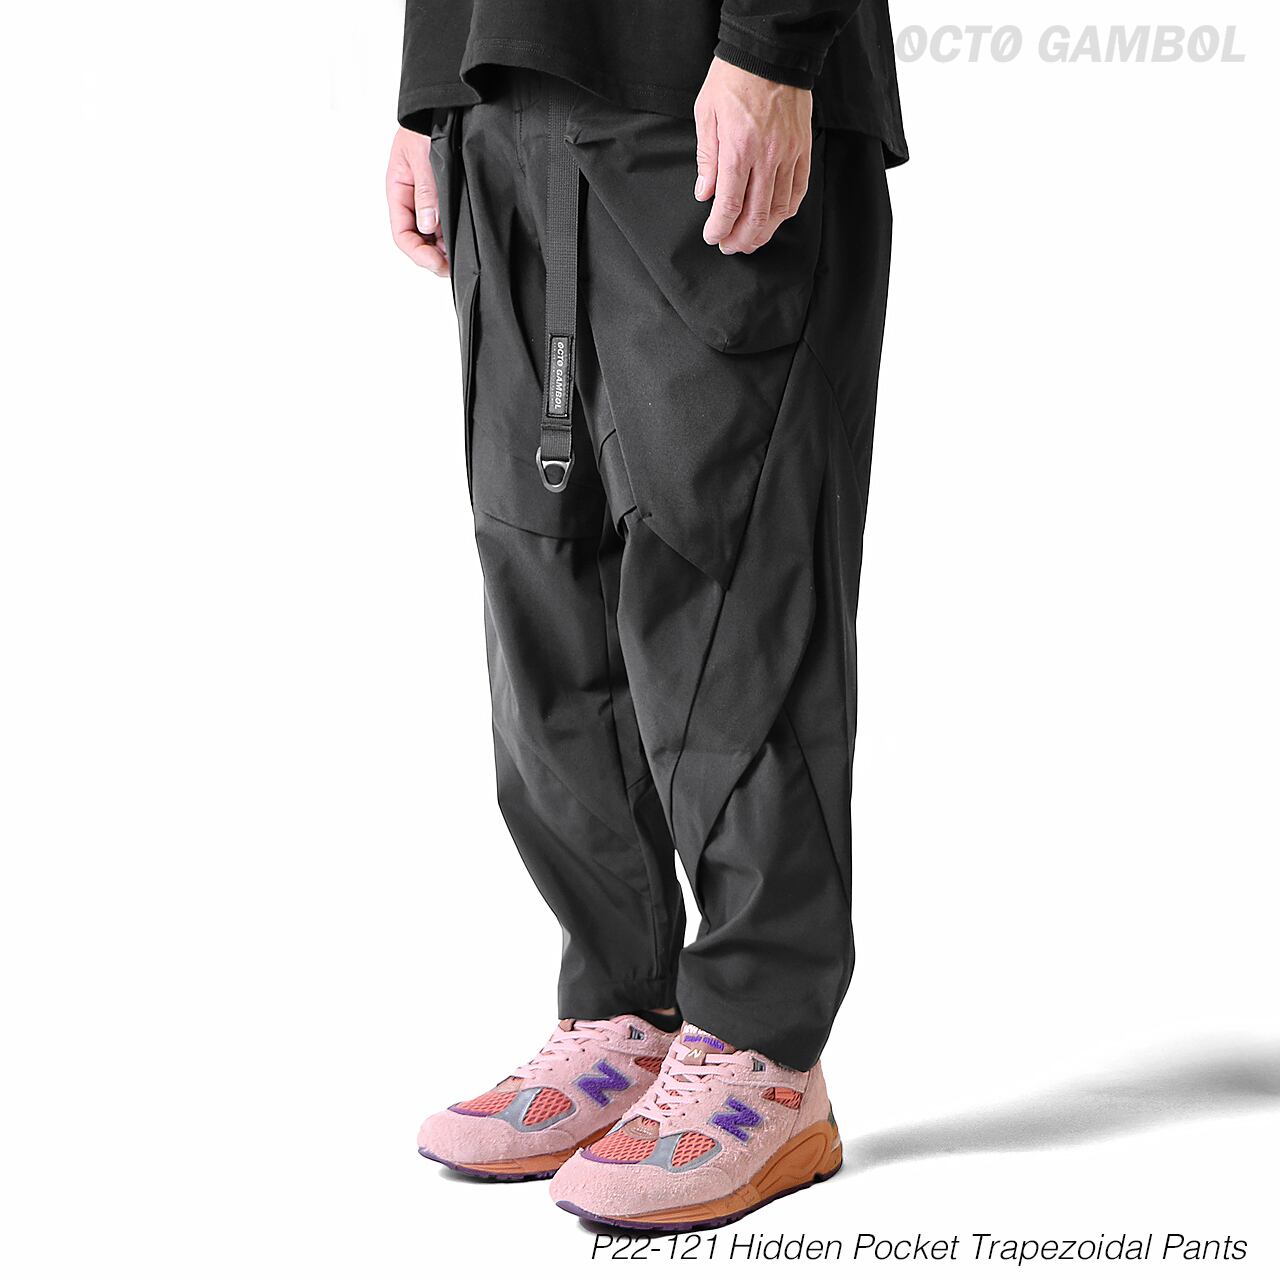 OCTO GAMBOL】P22-121 Hidden Pocket Trapezoidal Pants BLACK Geek Lands